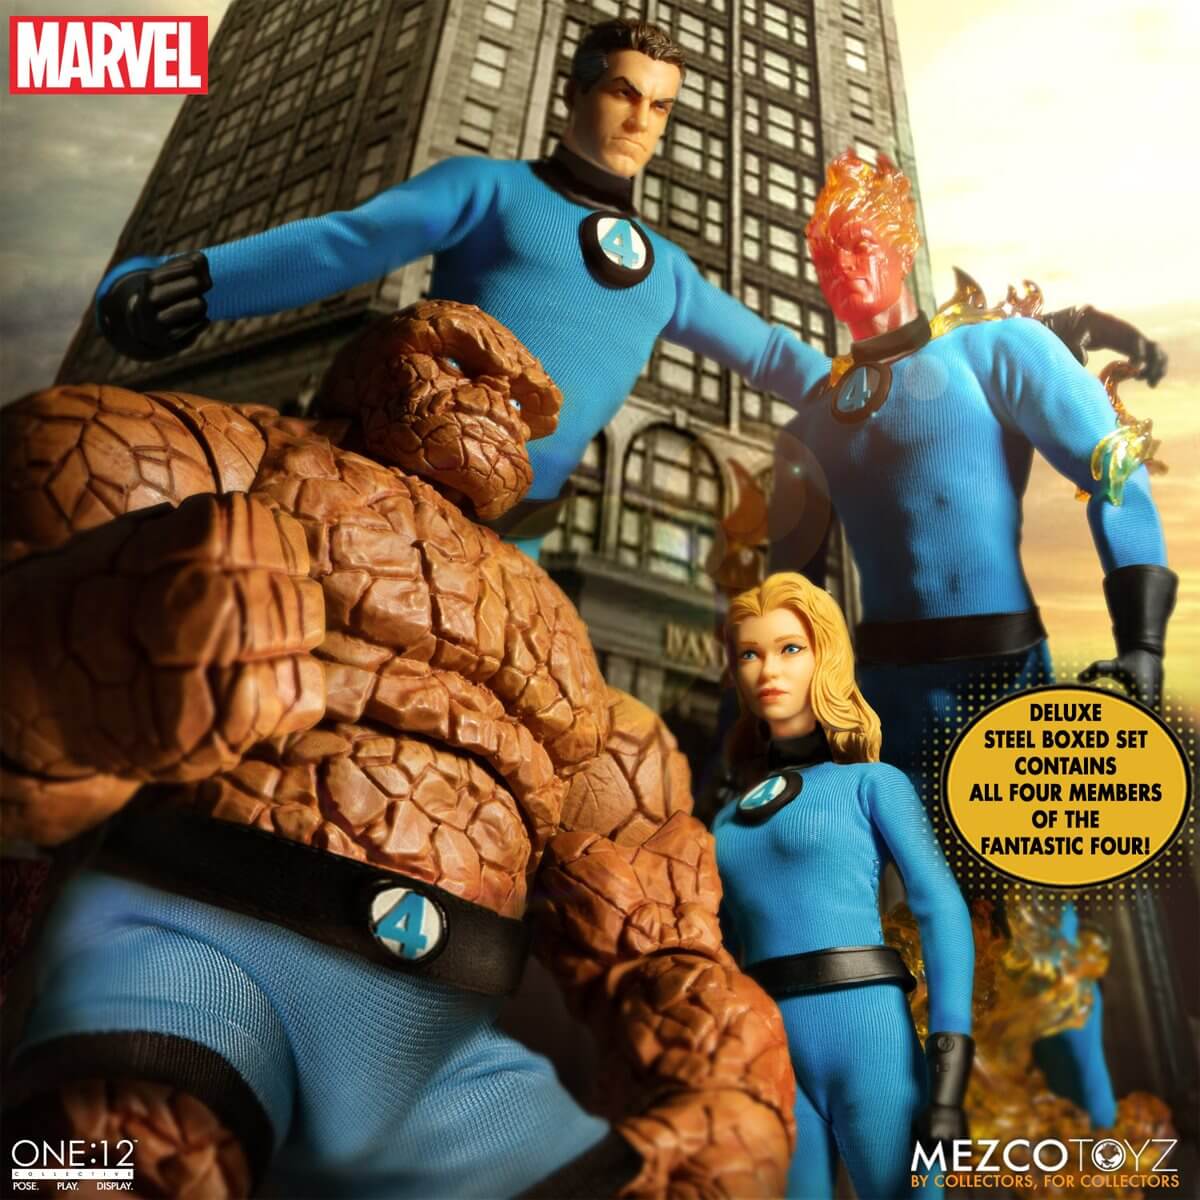 Fantastic Four Collective Deluxe Steel Boxed Set: explorando o universo Marvel no melhor estilo retrô